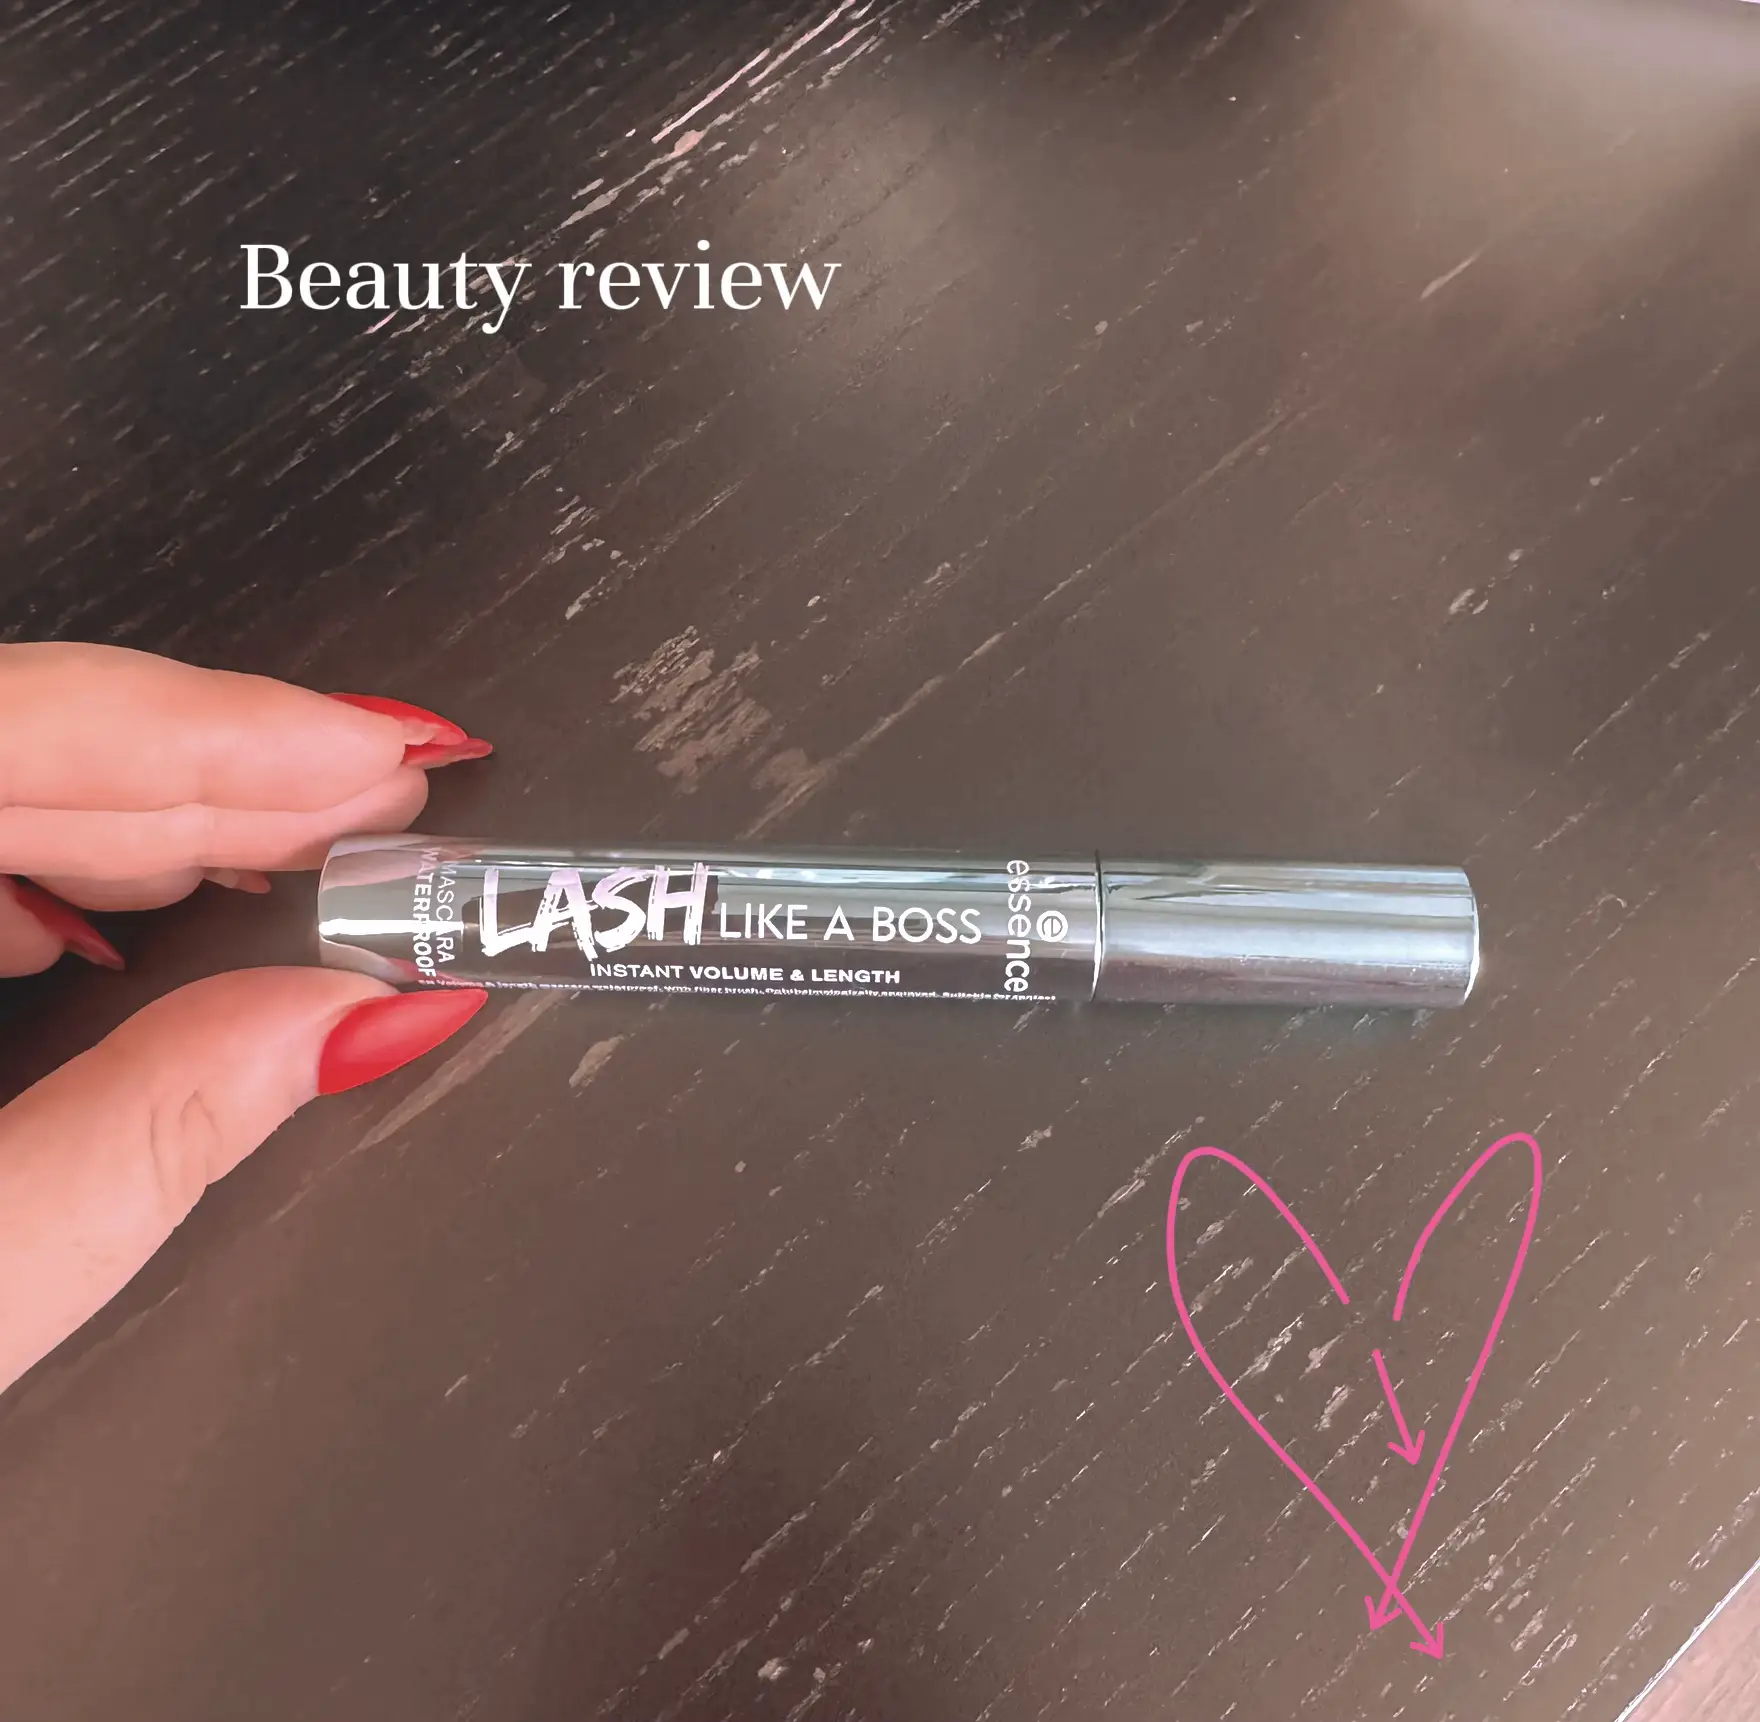 Beauty review Gallery Bridgetxo2 | posted | Lemon8 by